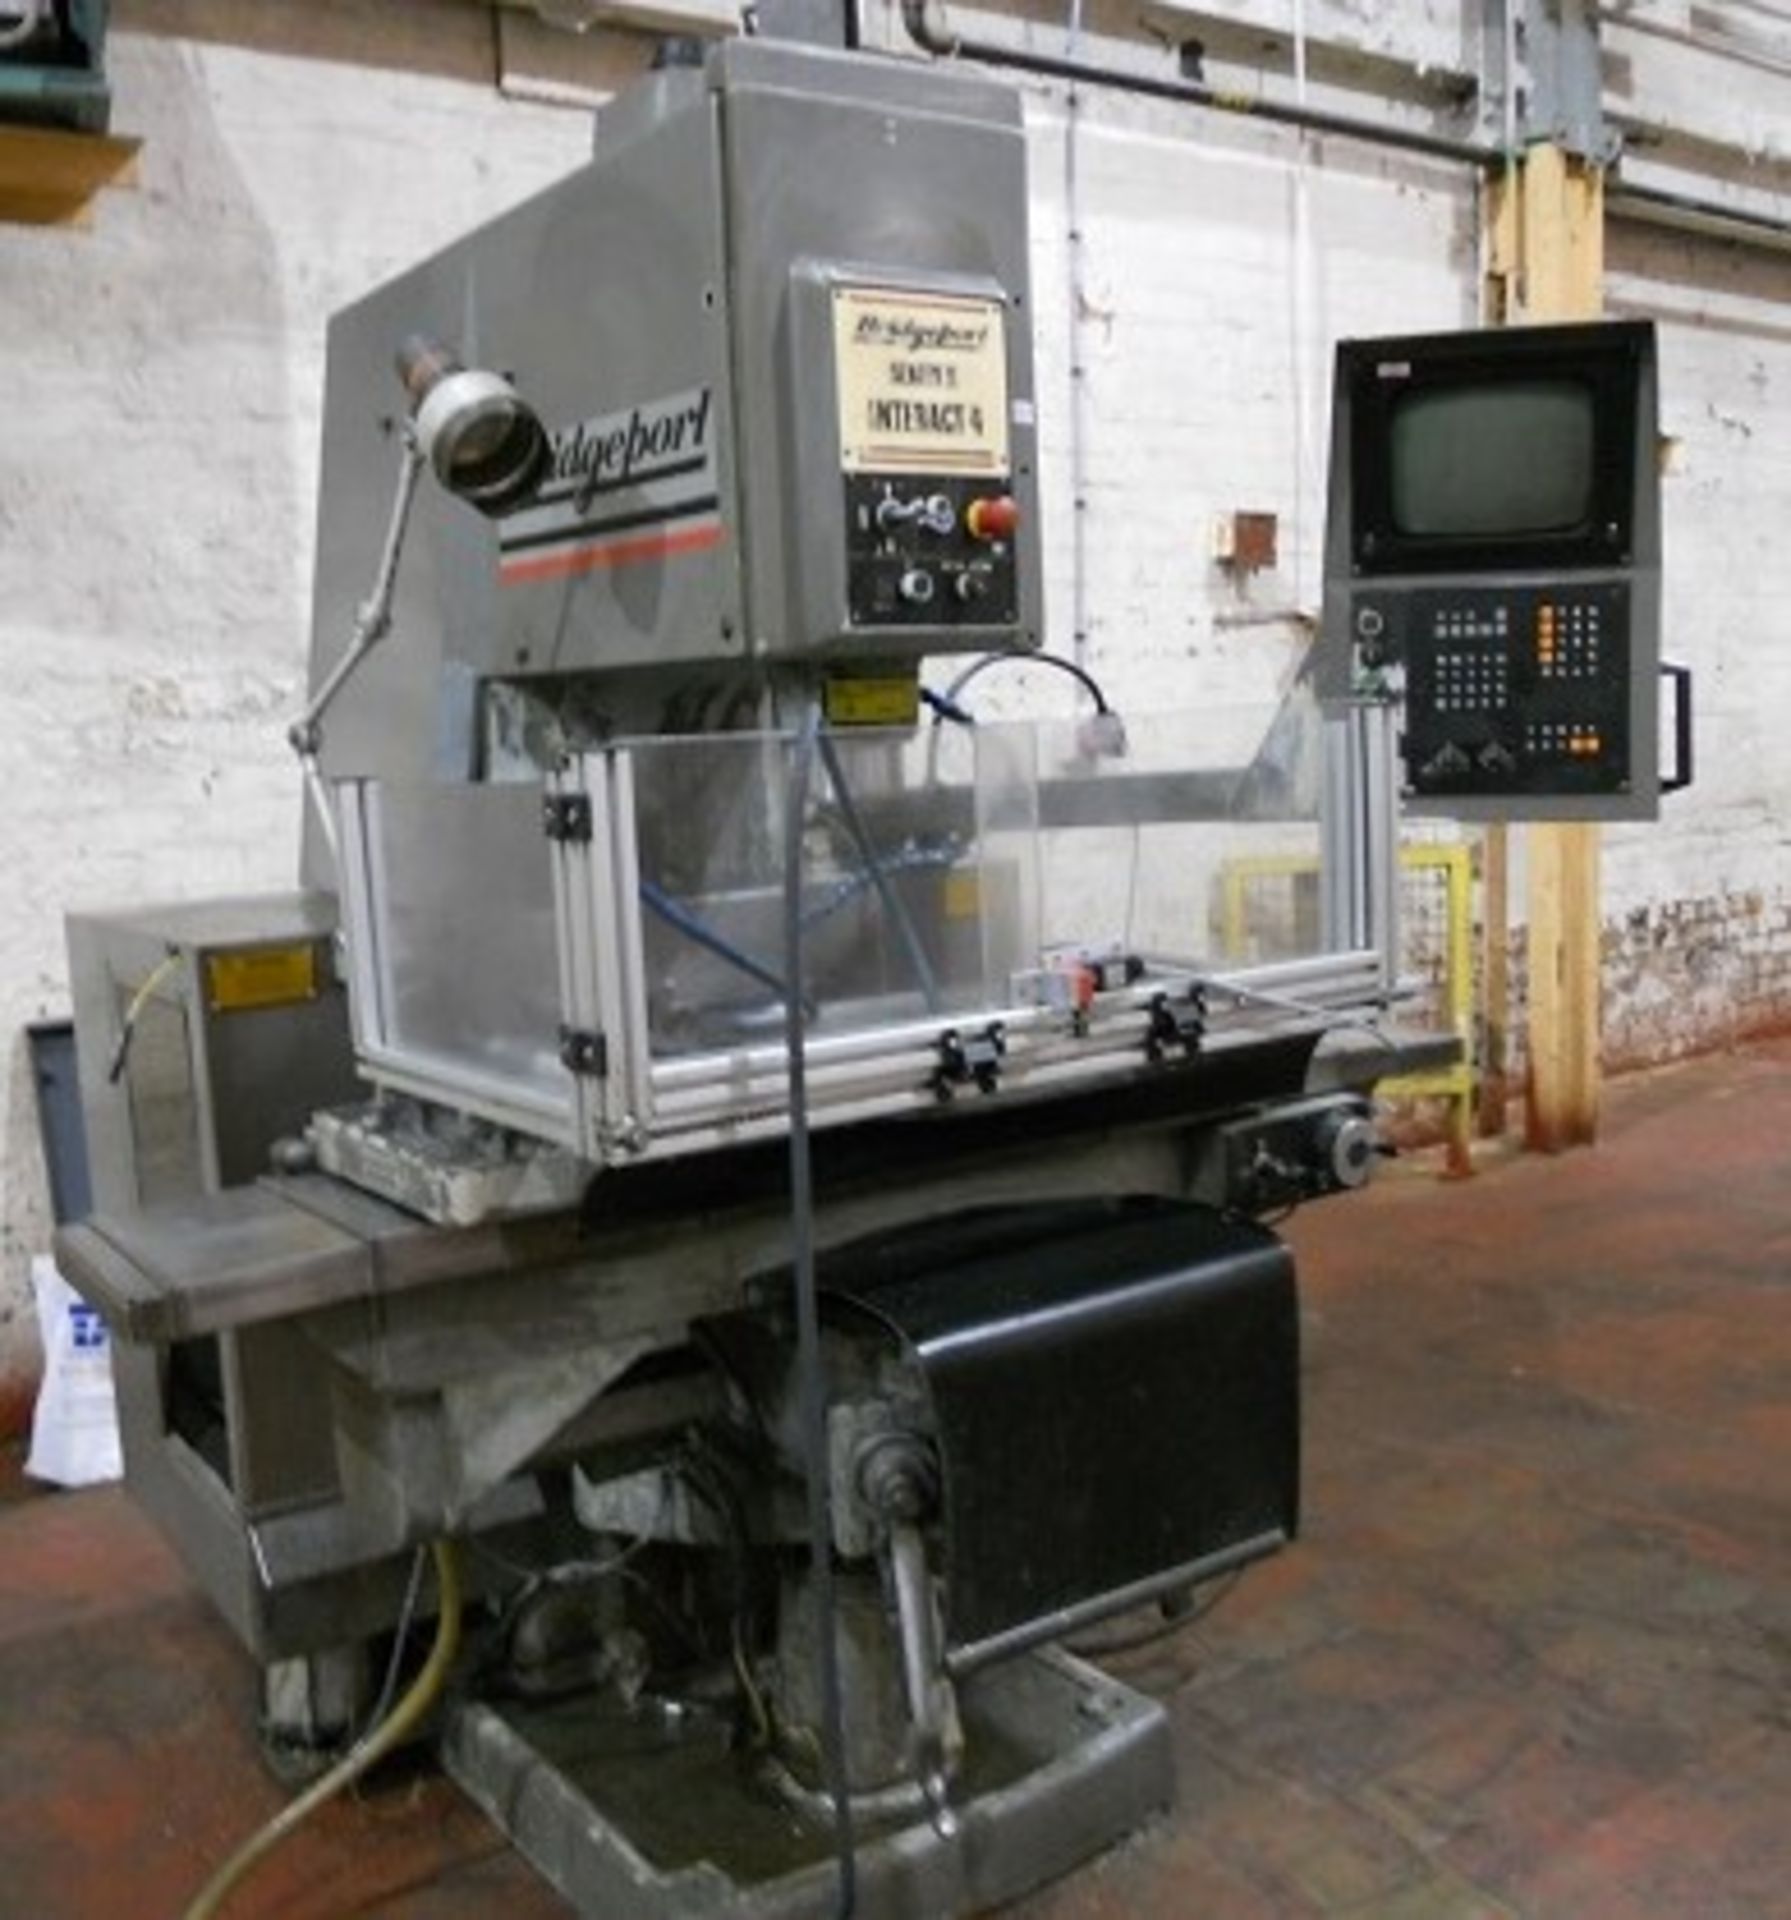 Bridgeport Series II Interact 4 CNC Milling Machine - Image 4 of 5